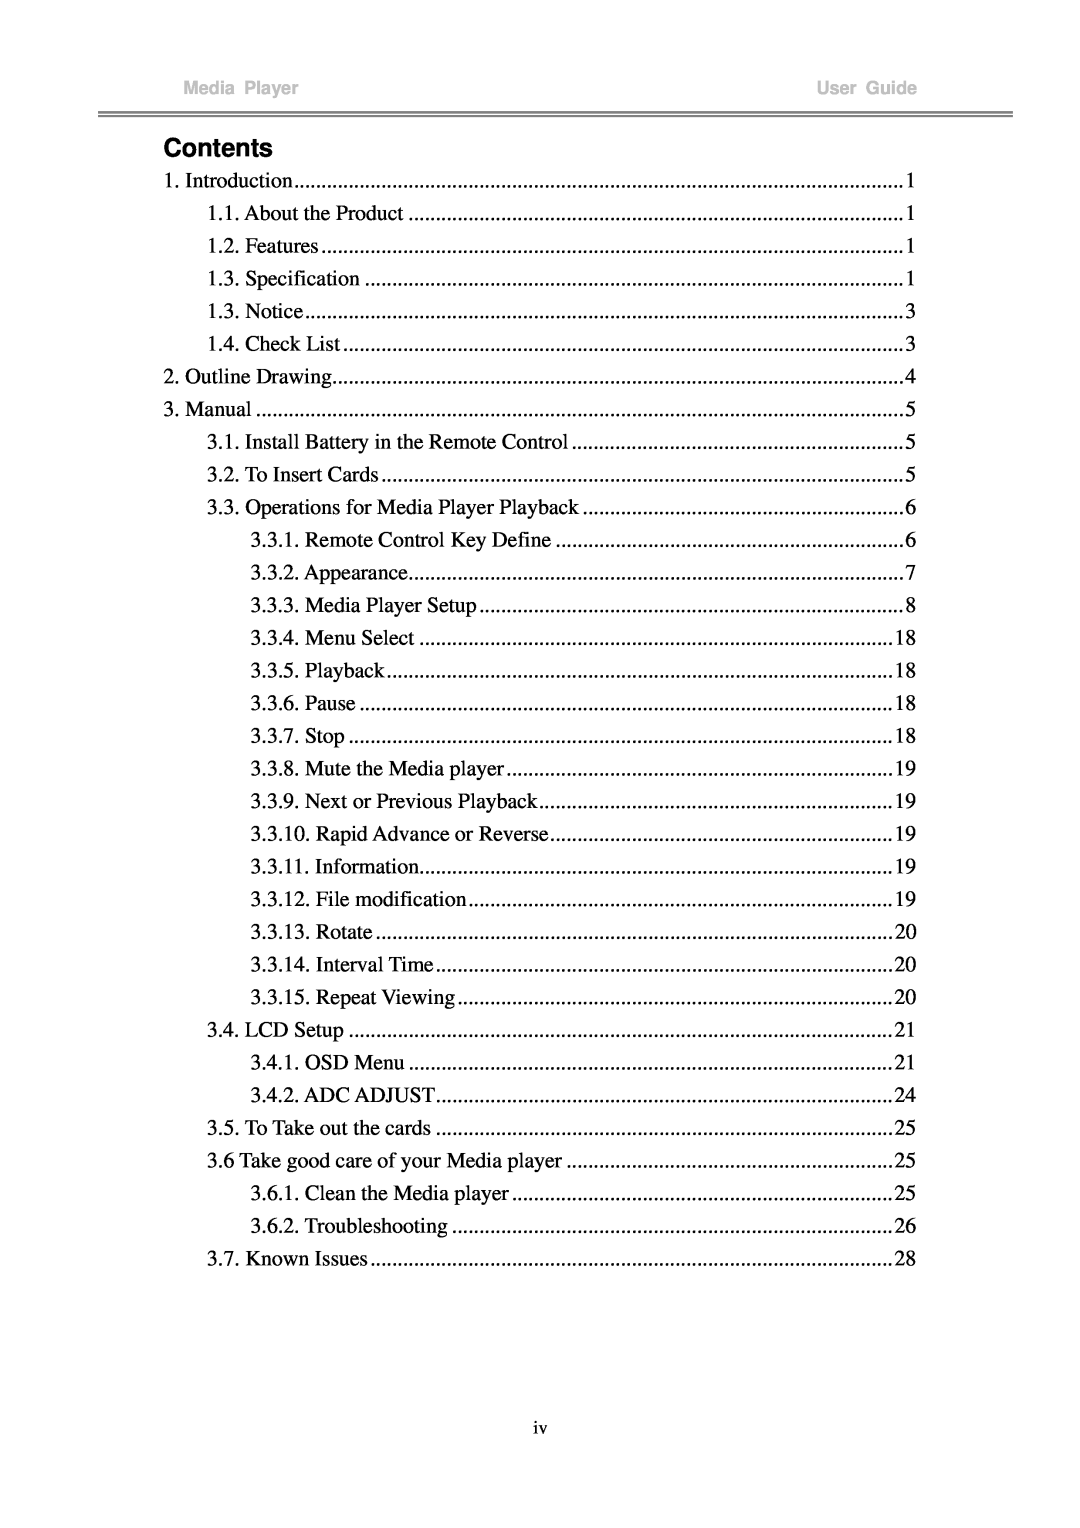 I-Tech Company MP3 Headphone manual Contents 